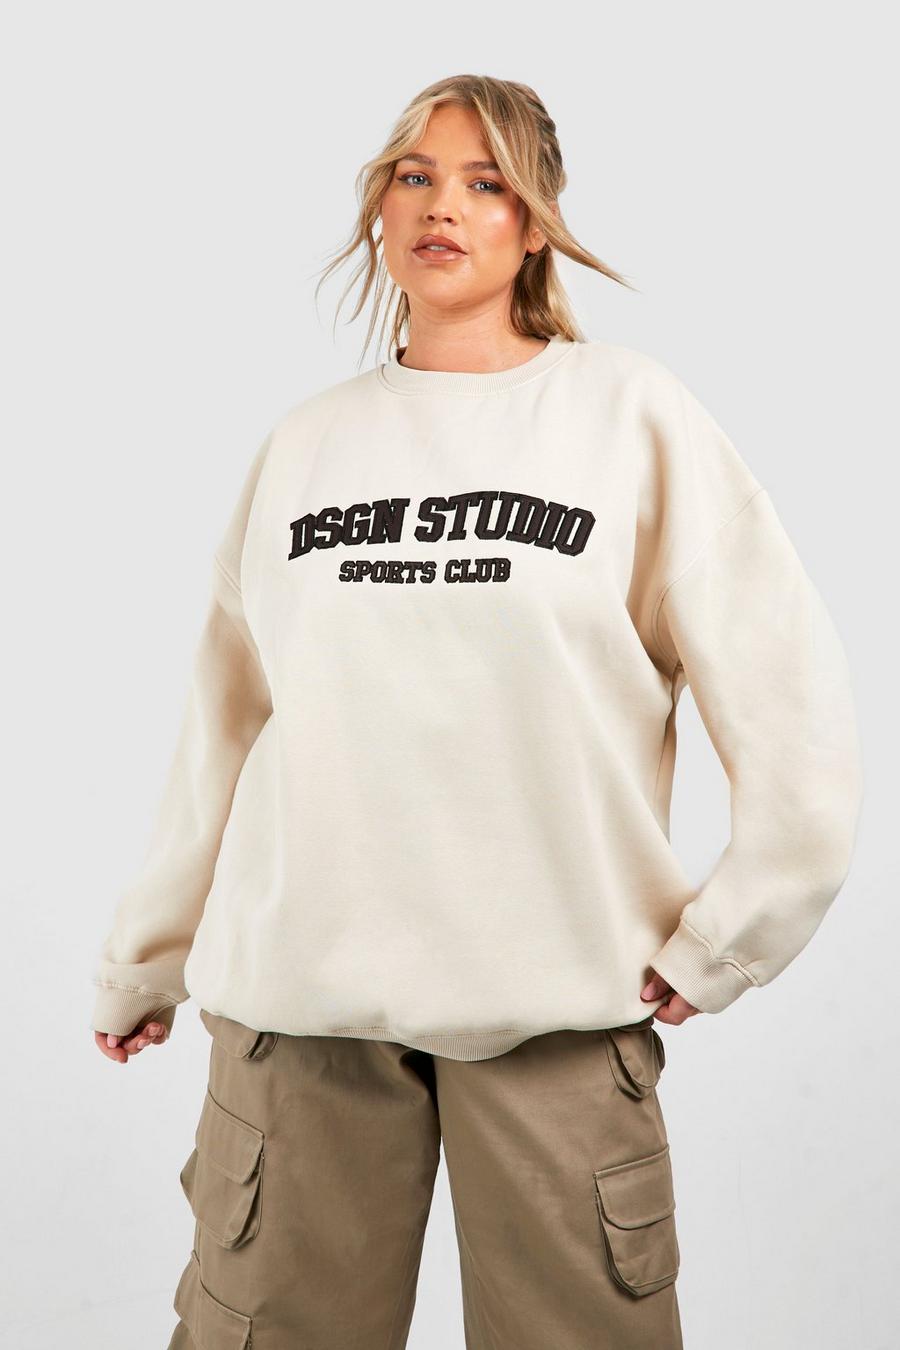 Stone Plus Dsgn Studio Applique Sweatshirt